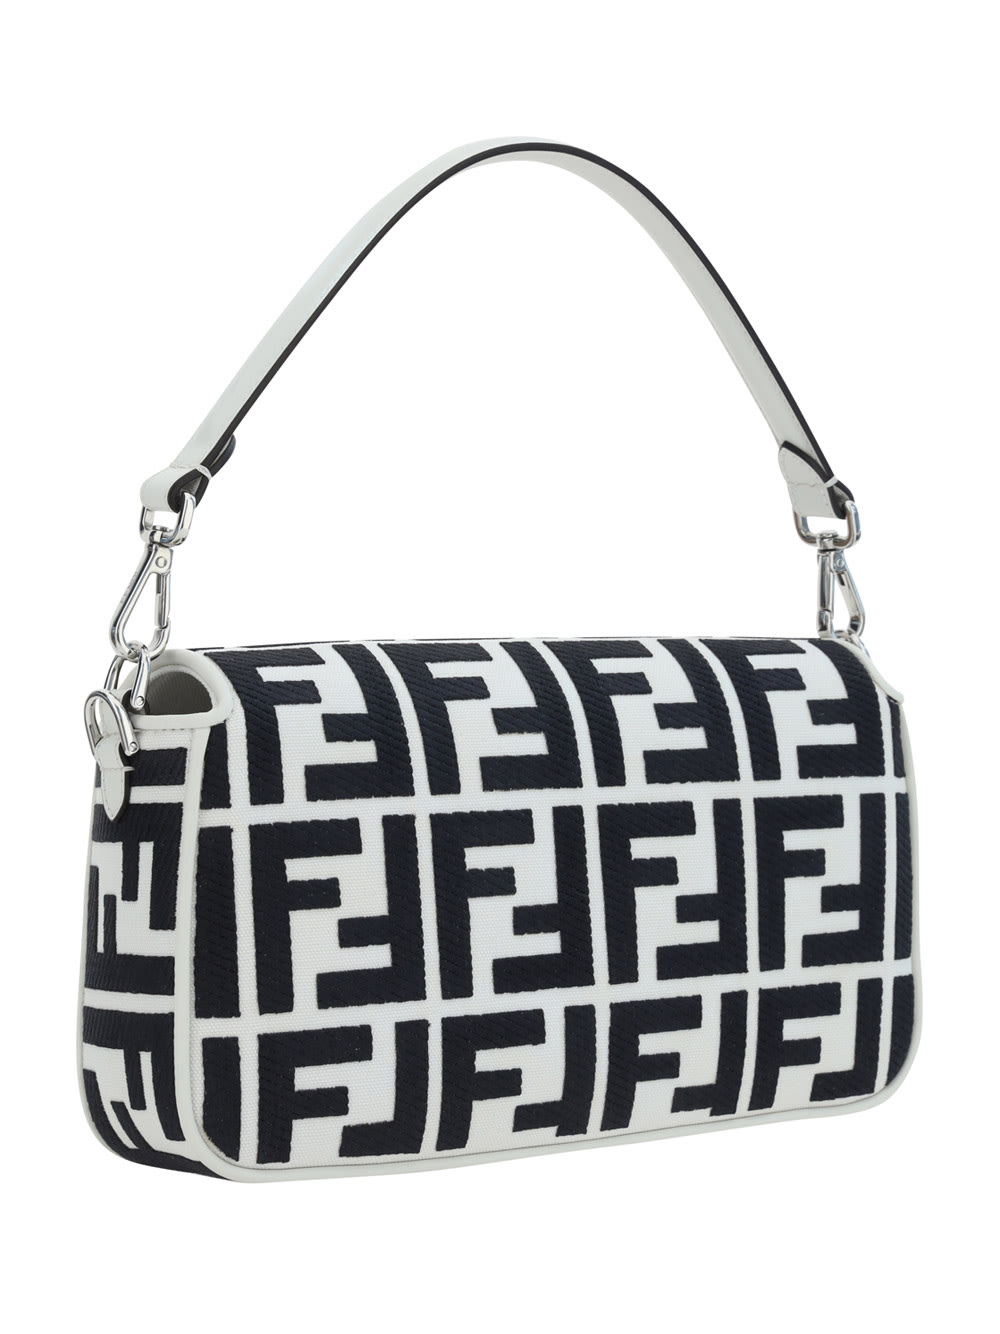 Fendi Baguette Bag for Women - Up to 33% off